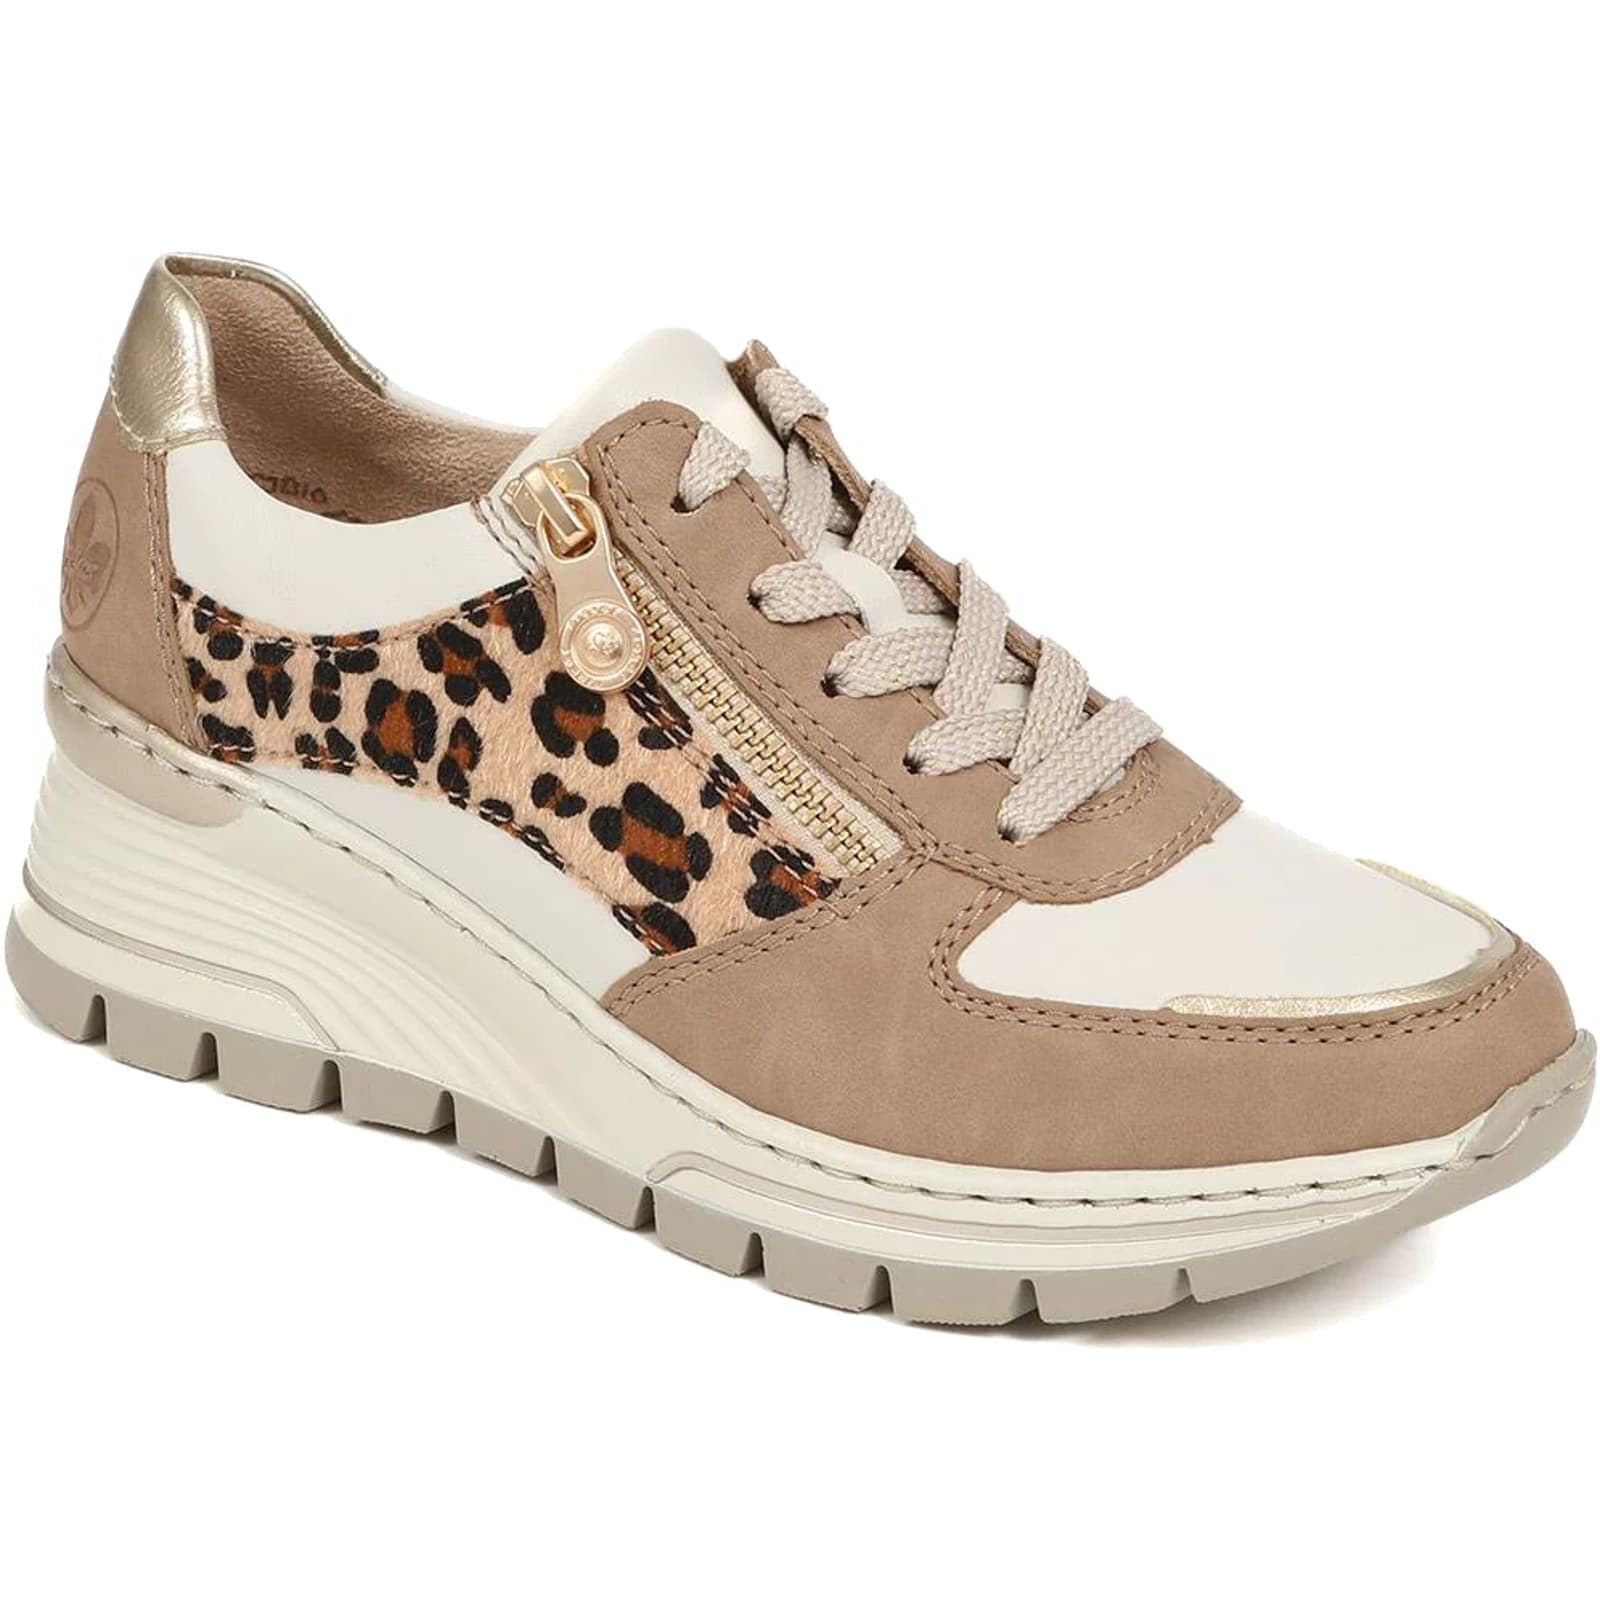 Rieker Women's N8308-64 Leopard Print Zip Trainers Shoes - UK 4 / EU 37